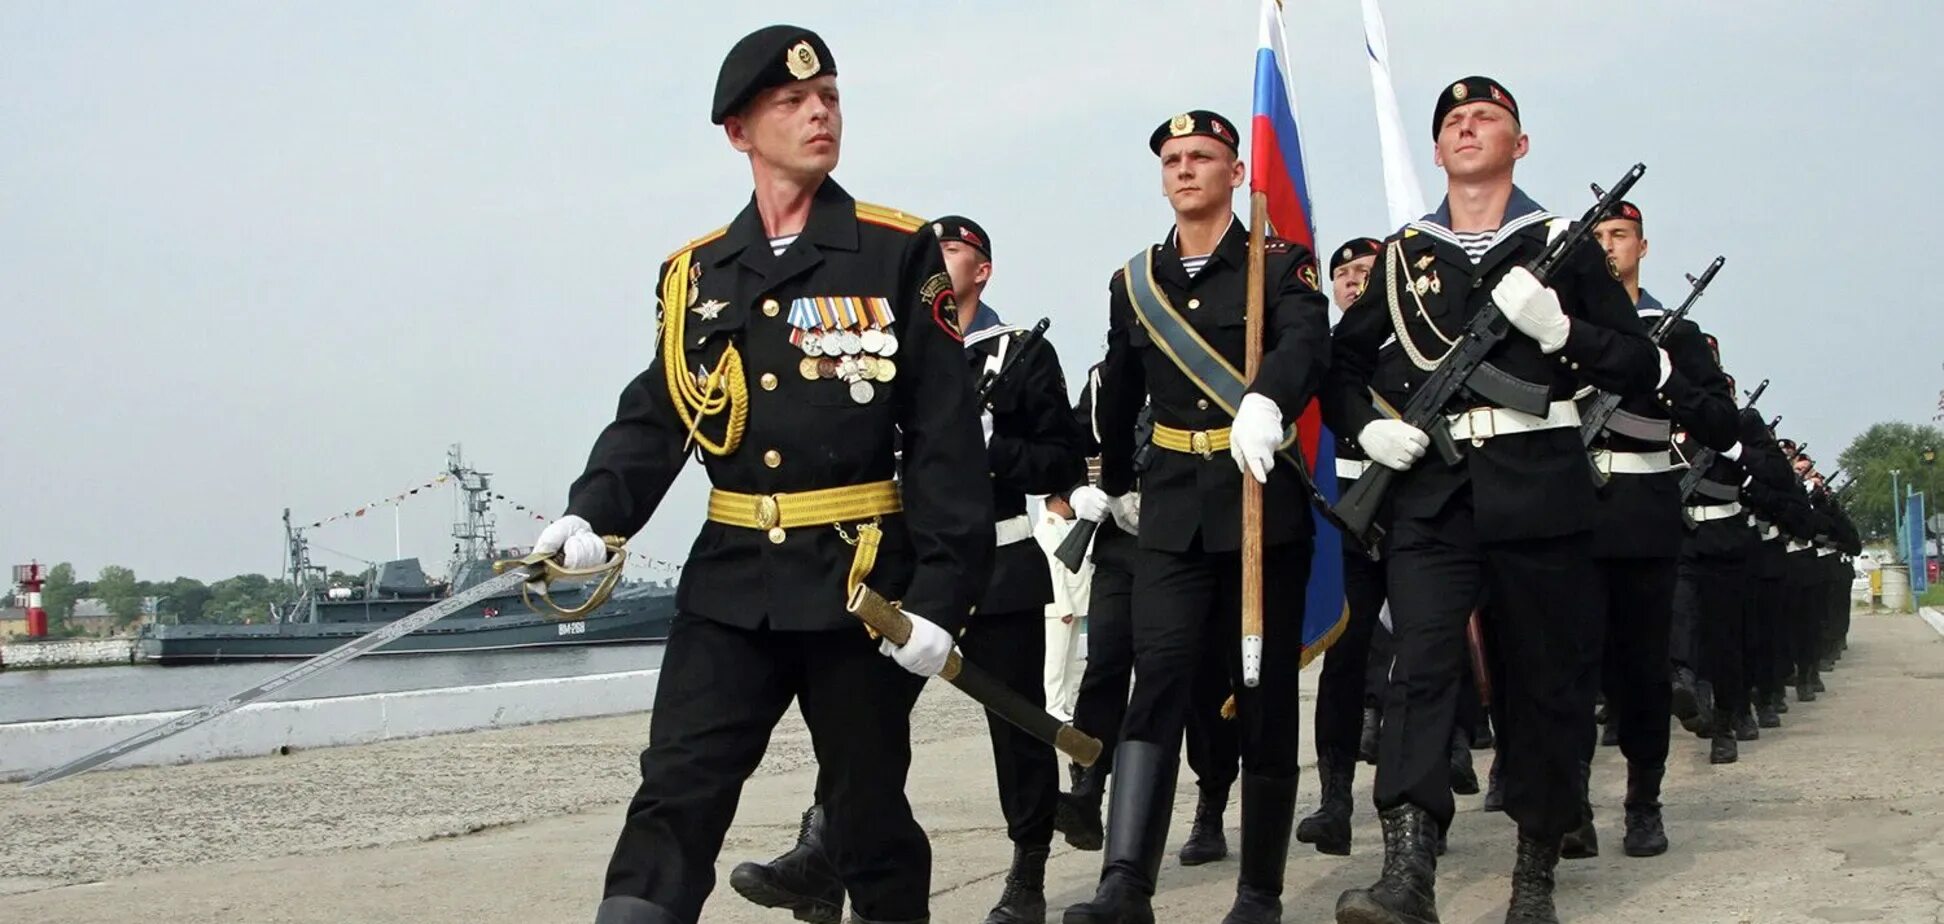 Морская пехота ВМФ РФ. 155 ОБРМП ТОФ. Морская пехота ВМФ РФ 2022. Морская пехота вс РФ парадная. 27 ноября 2006 г